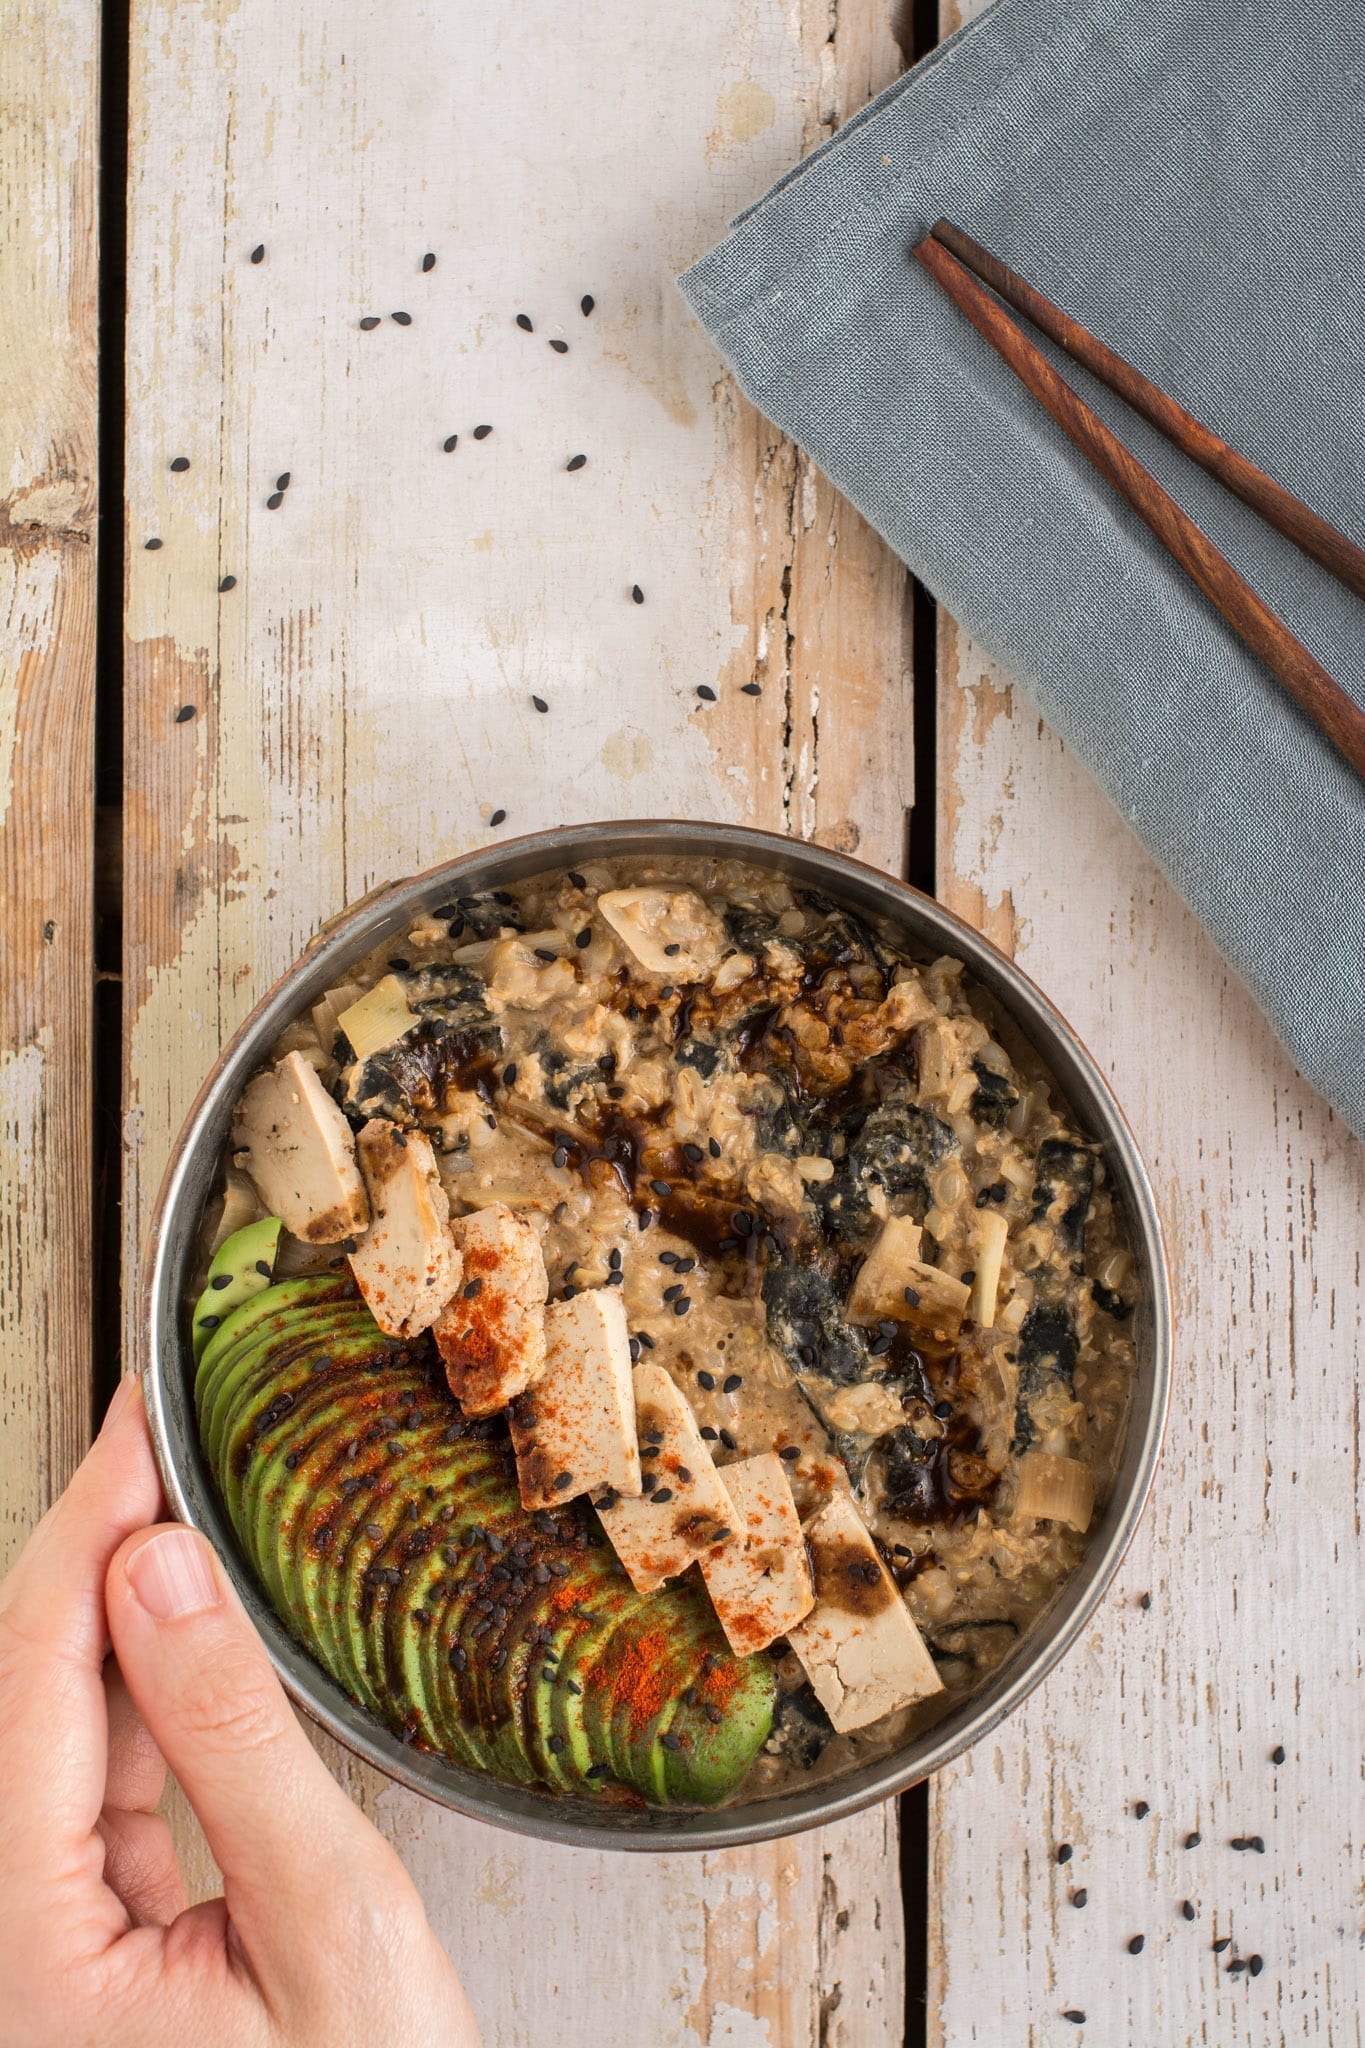 Try this vegan version of Japanese breakfast rice porridge with some healthy tweaks. It’s like eating sushi for breakfast, but in the form of comforting porridge bowl.